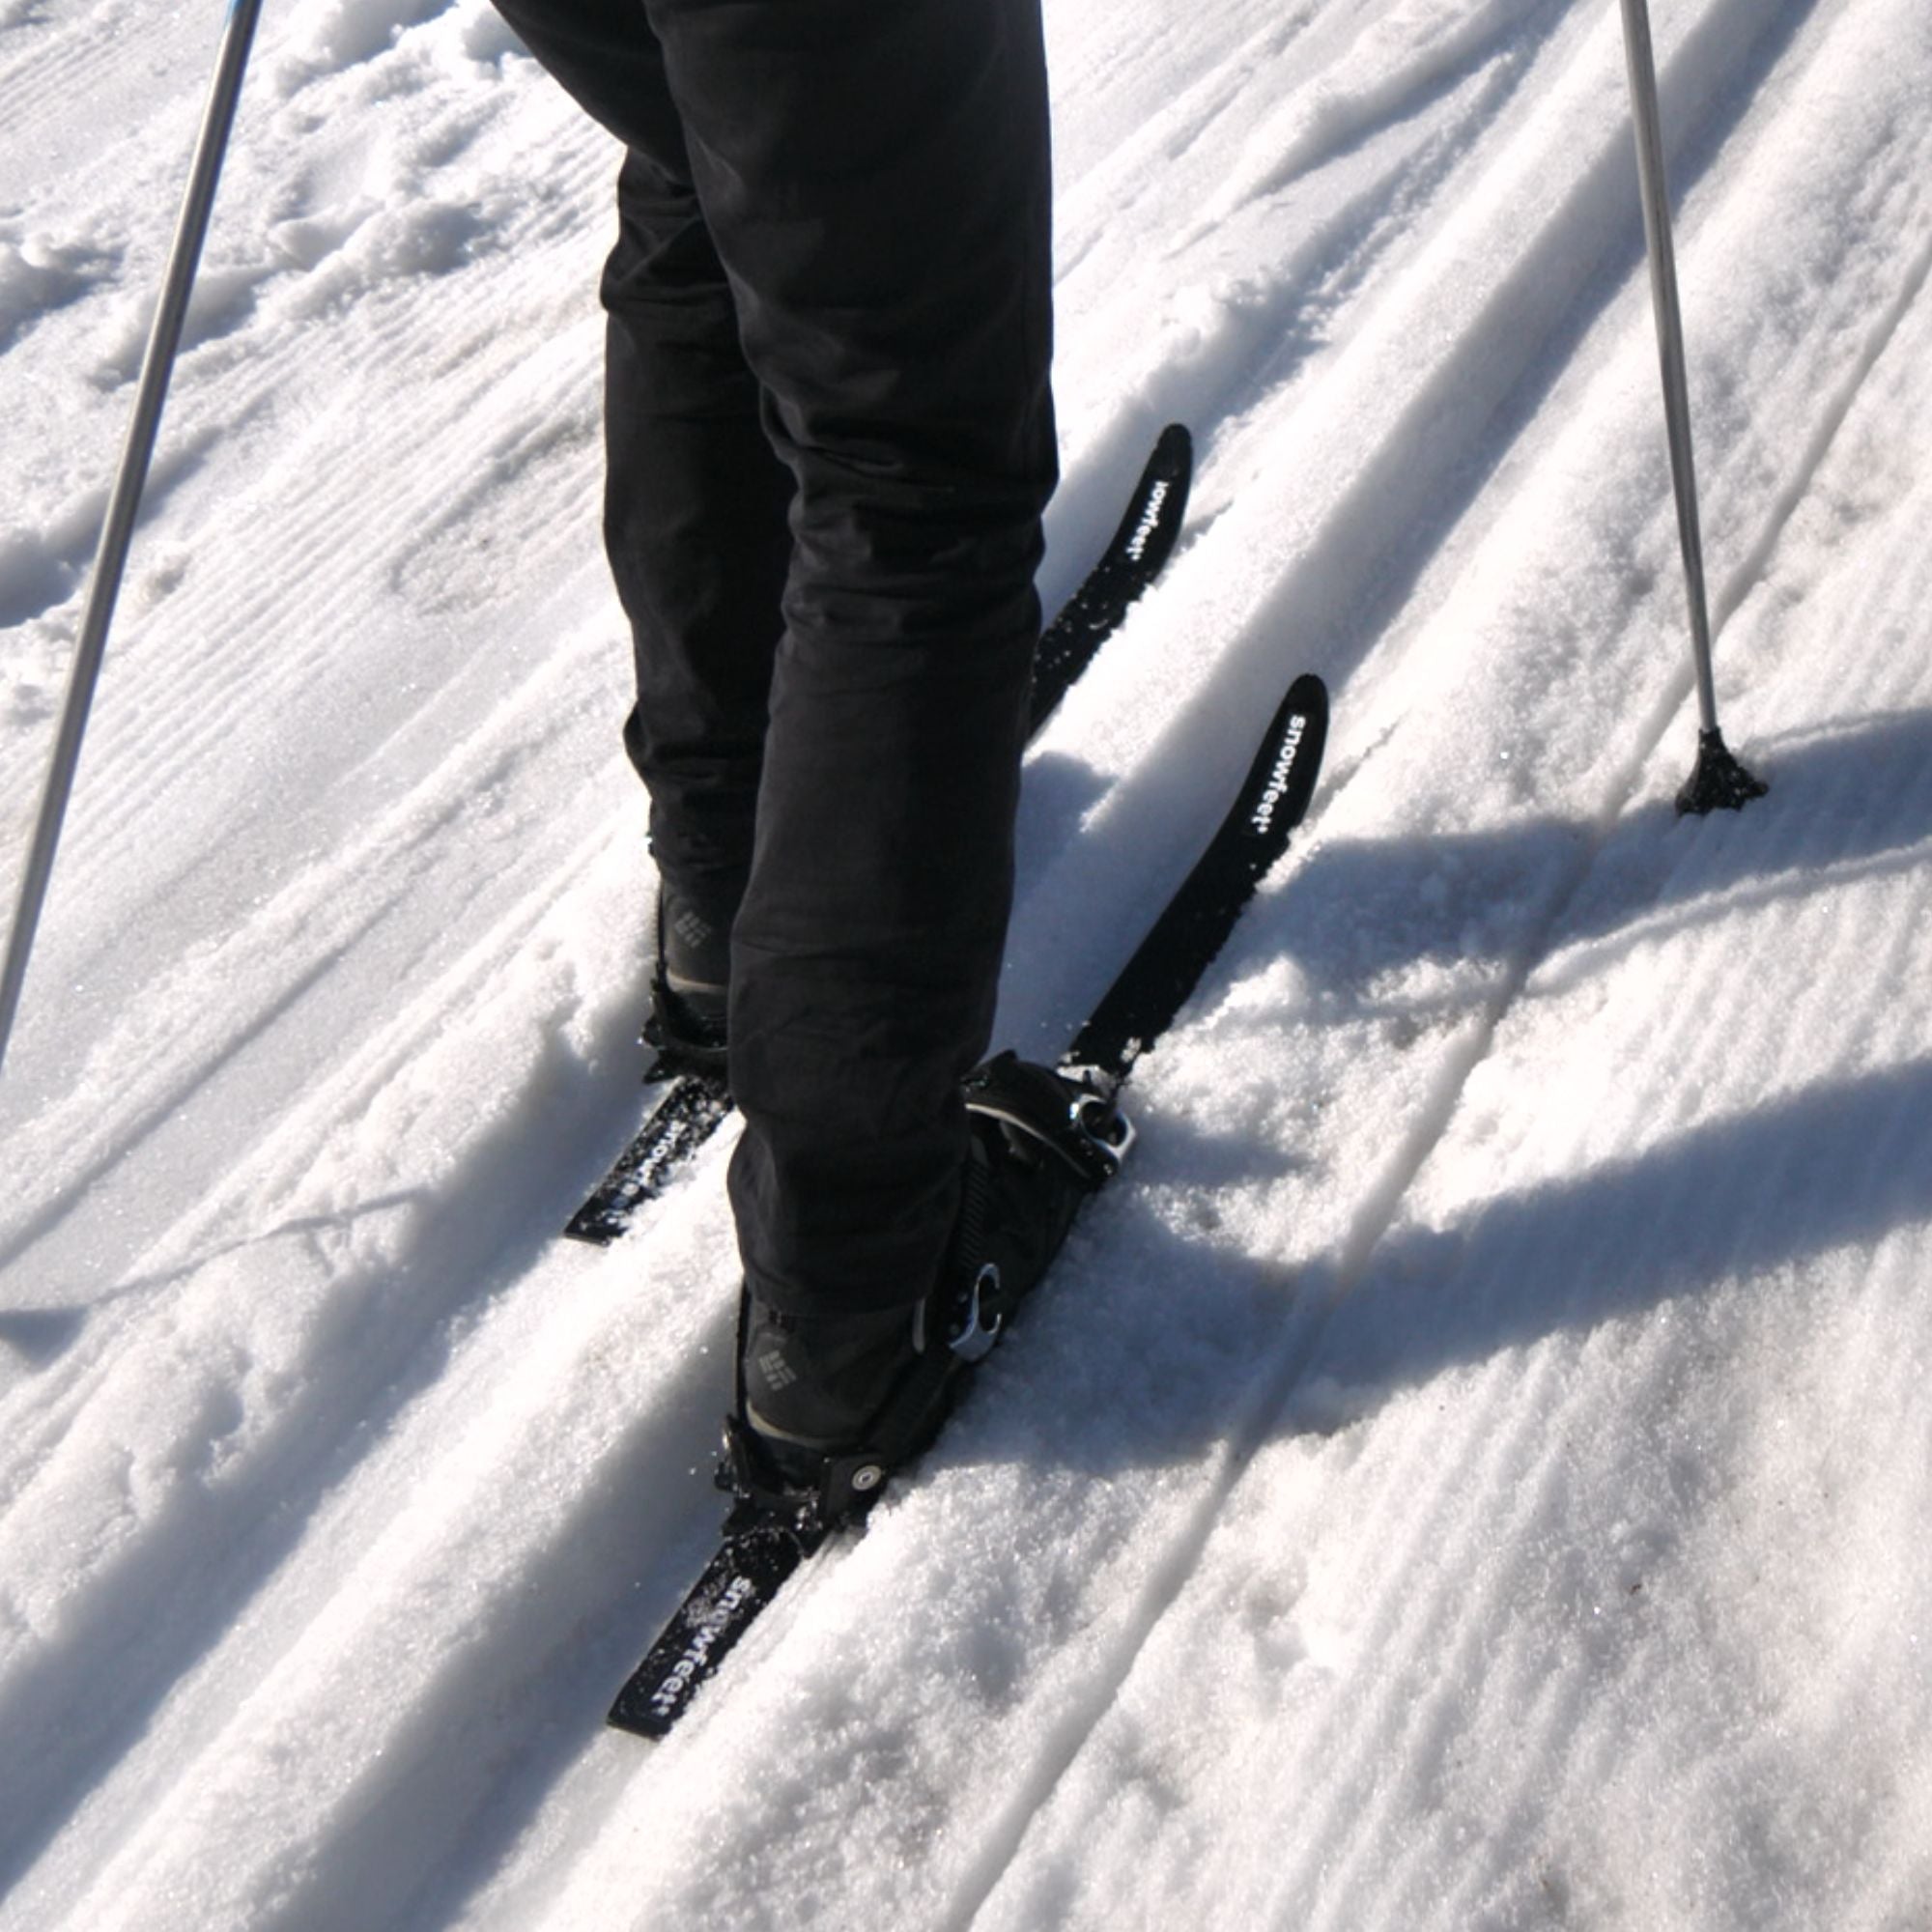 snowfeet-nordic-ski-cross-country-ski-90cm